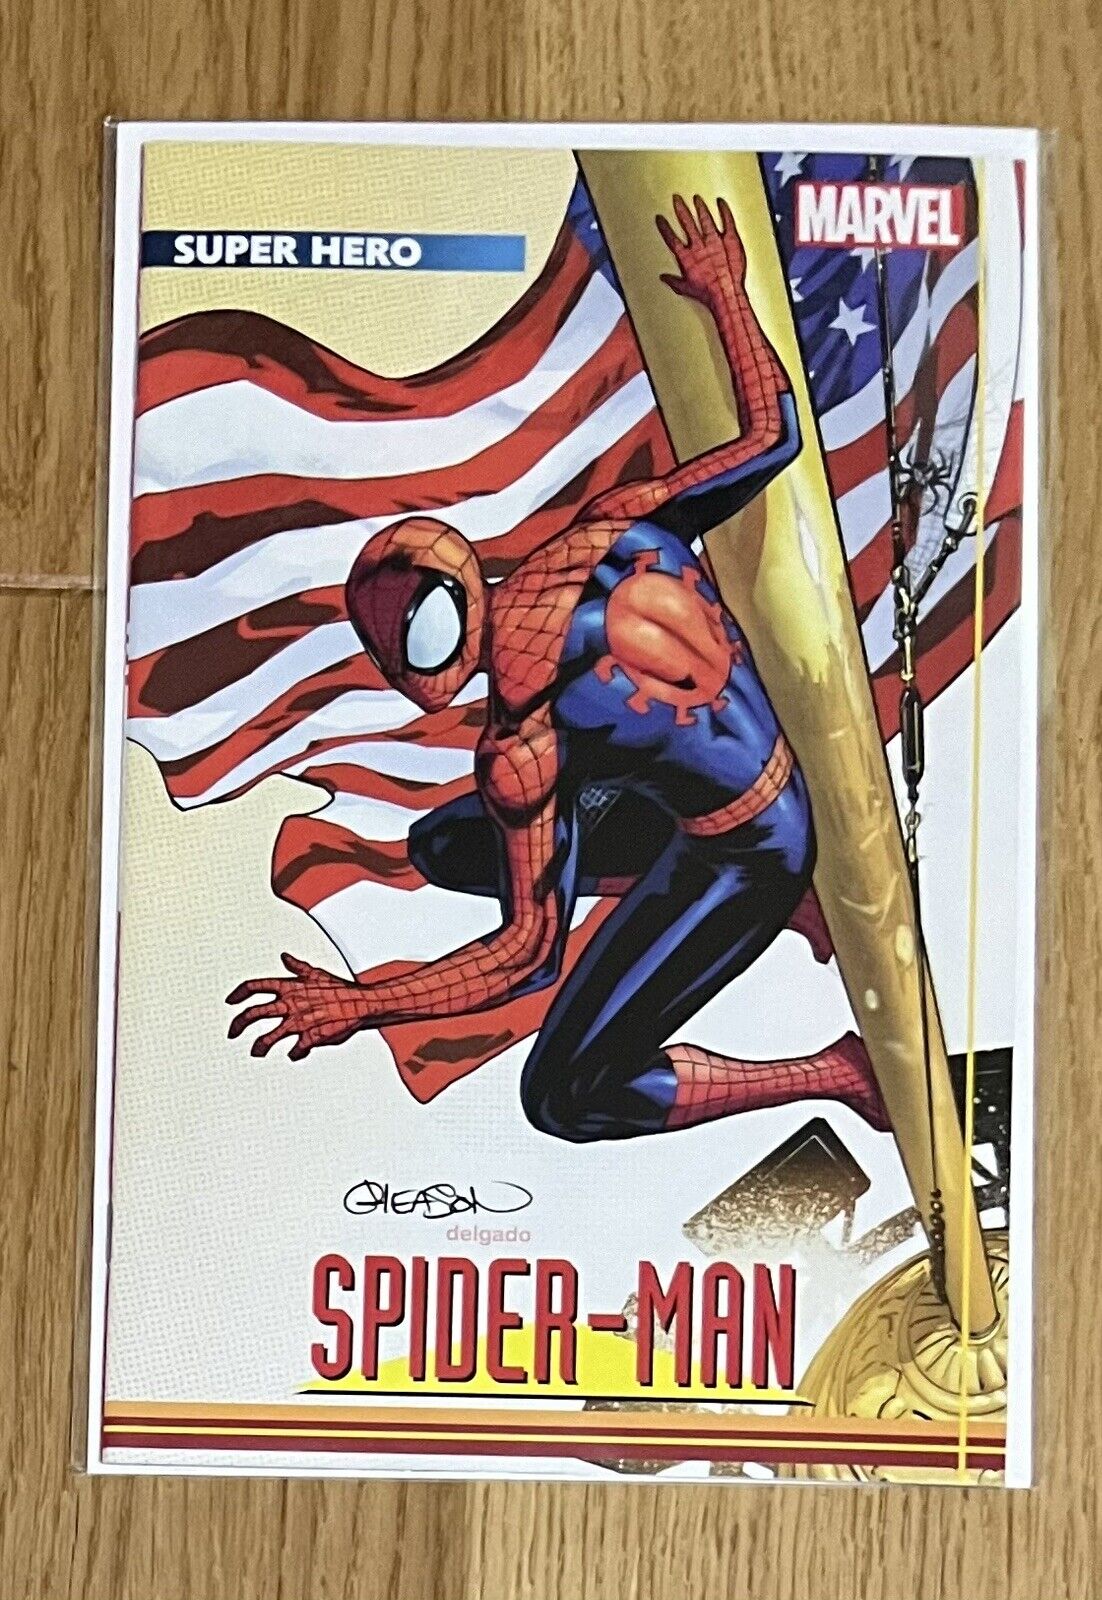 Dark Ages #1 Patrick Gleason Spiderman Card Variant American Flag Cover